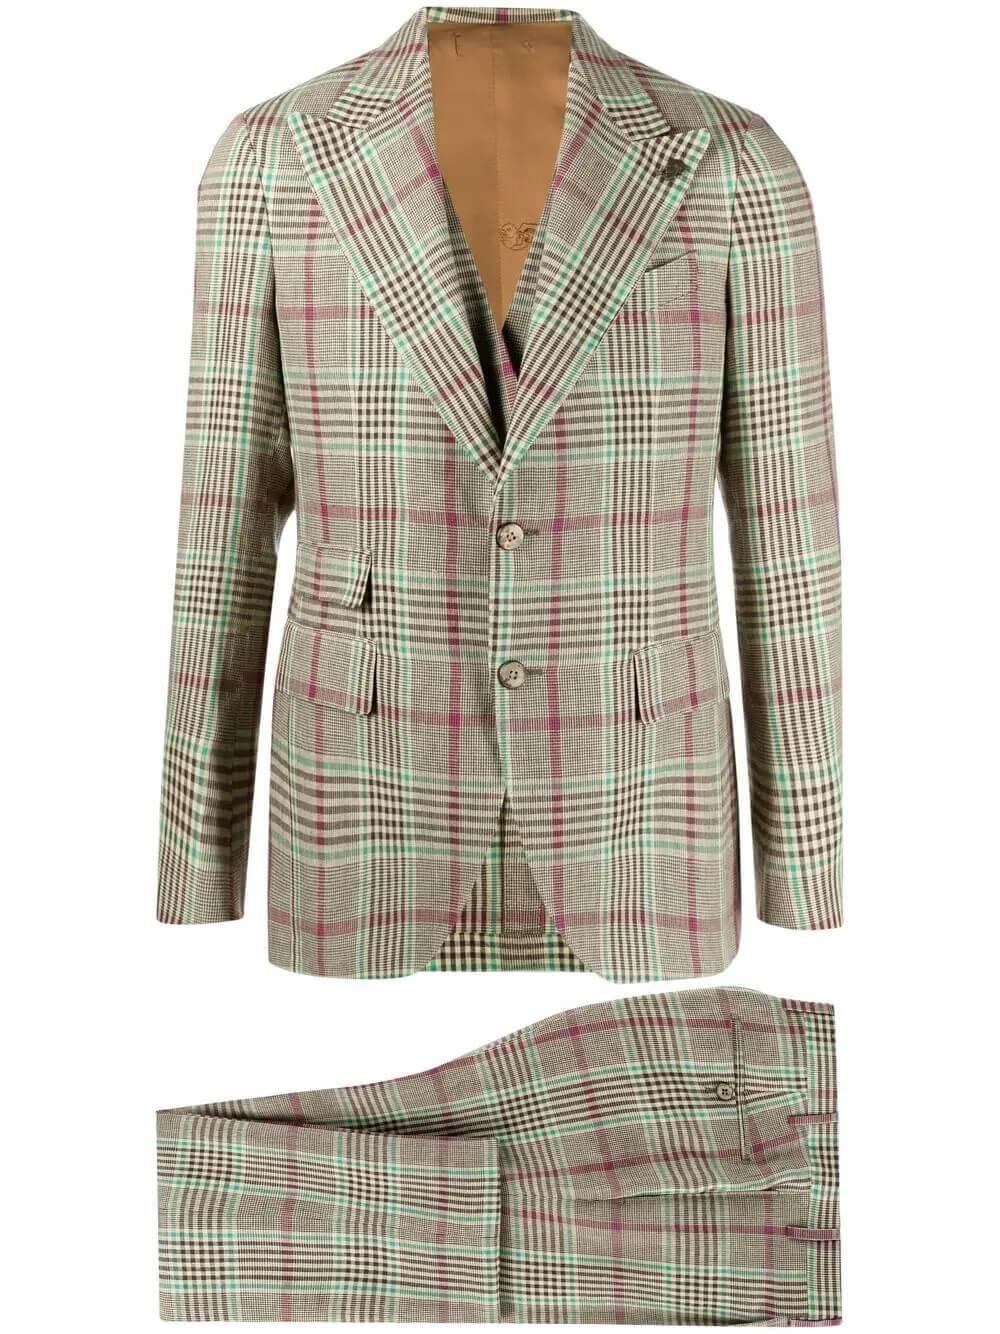 GABRIELE PASINI 3-Piece Suit in Brown Prince of Wales | CLOSET Singapore